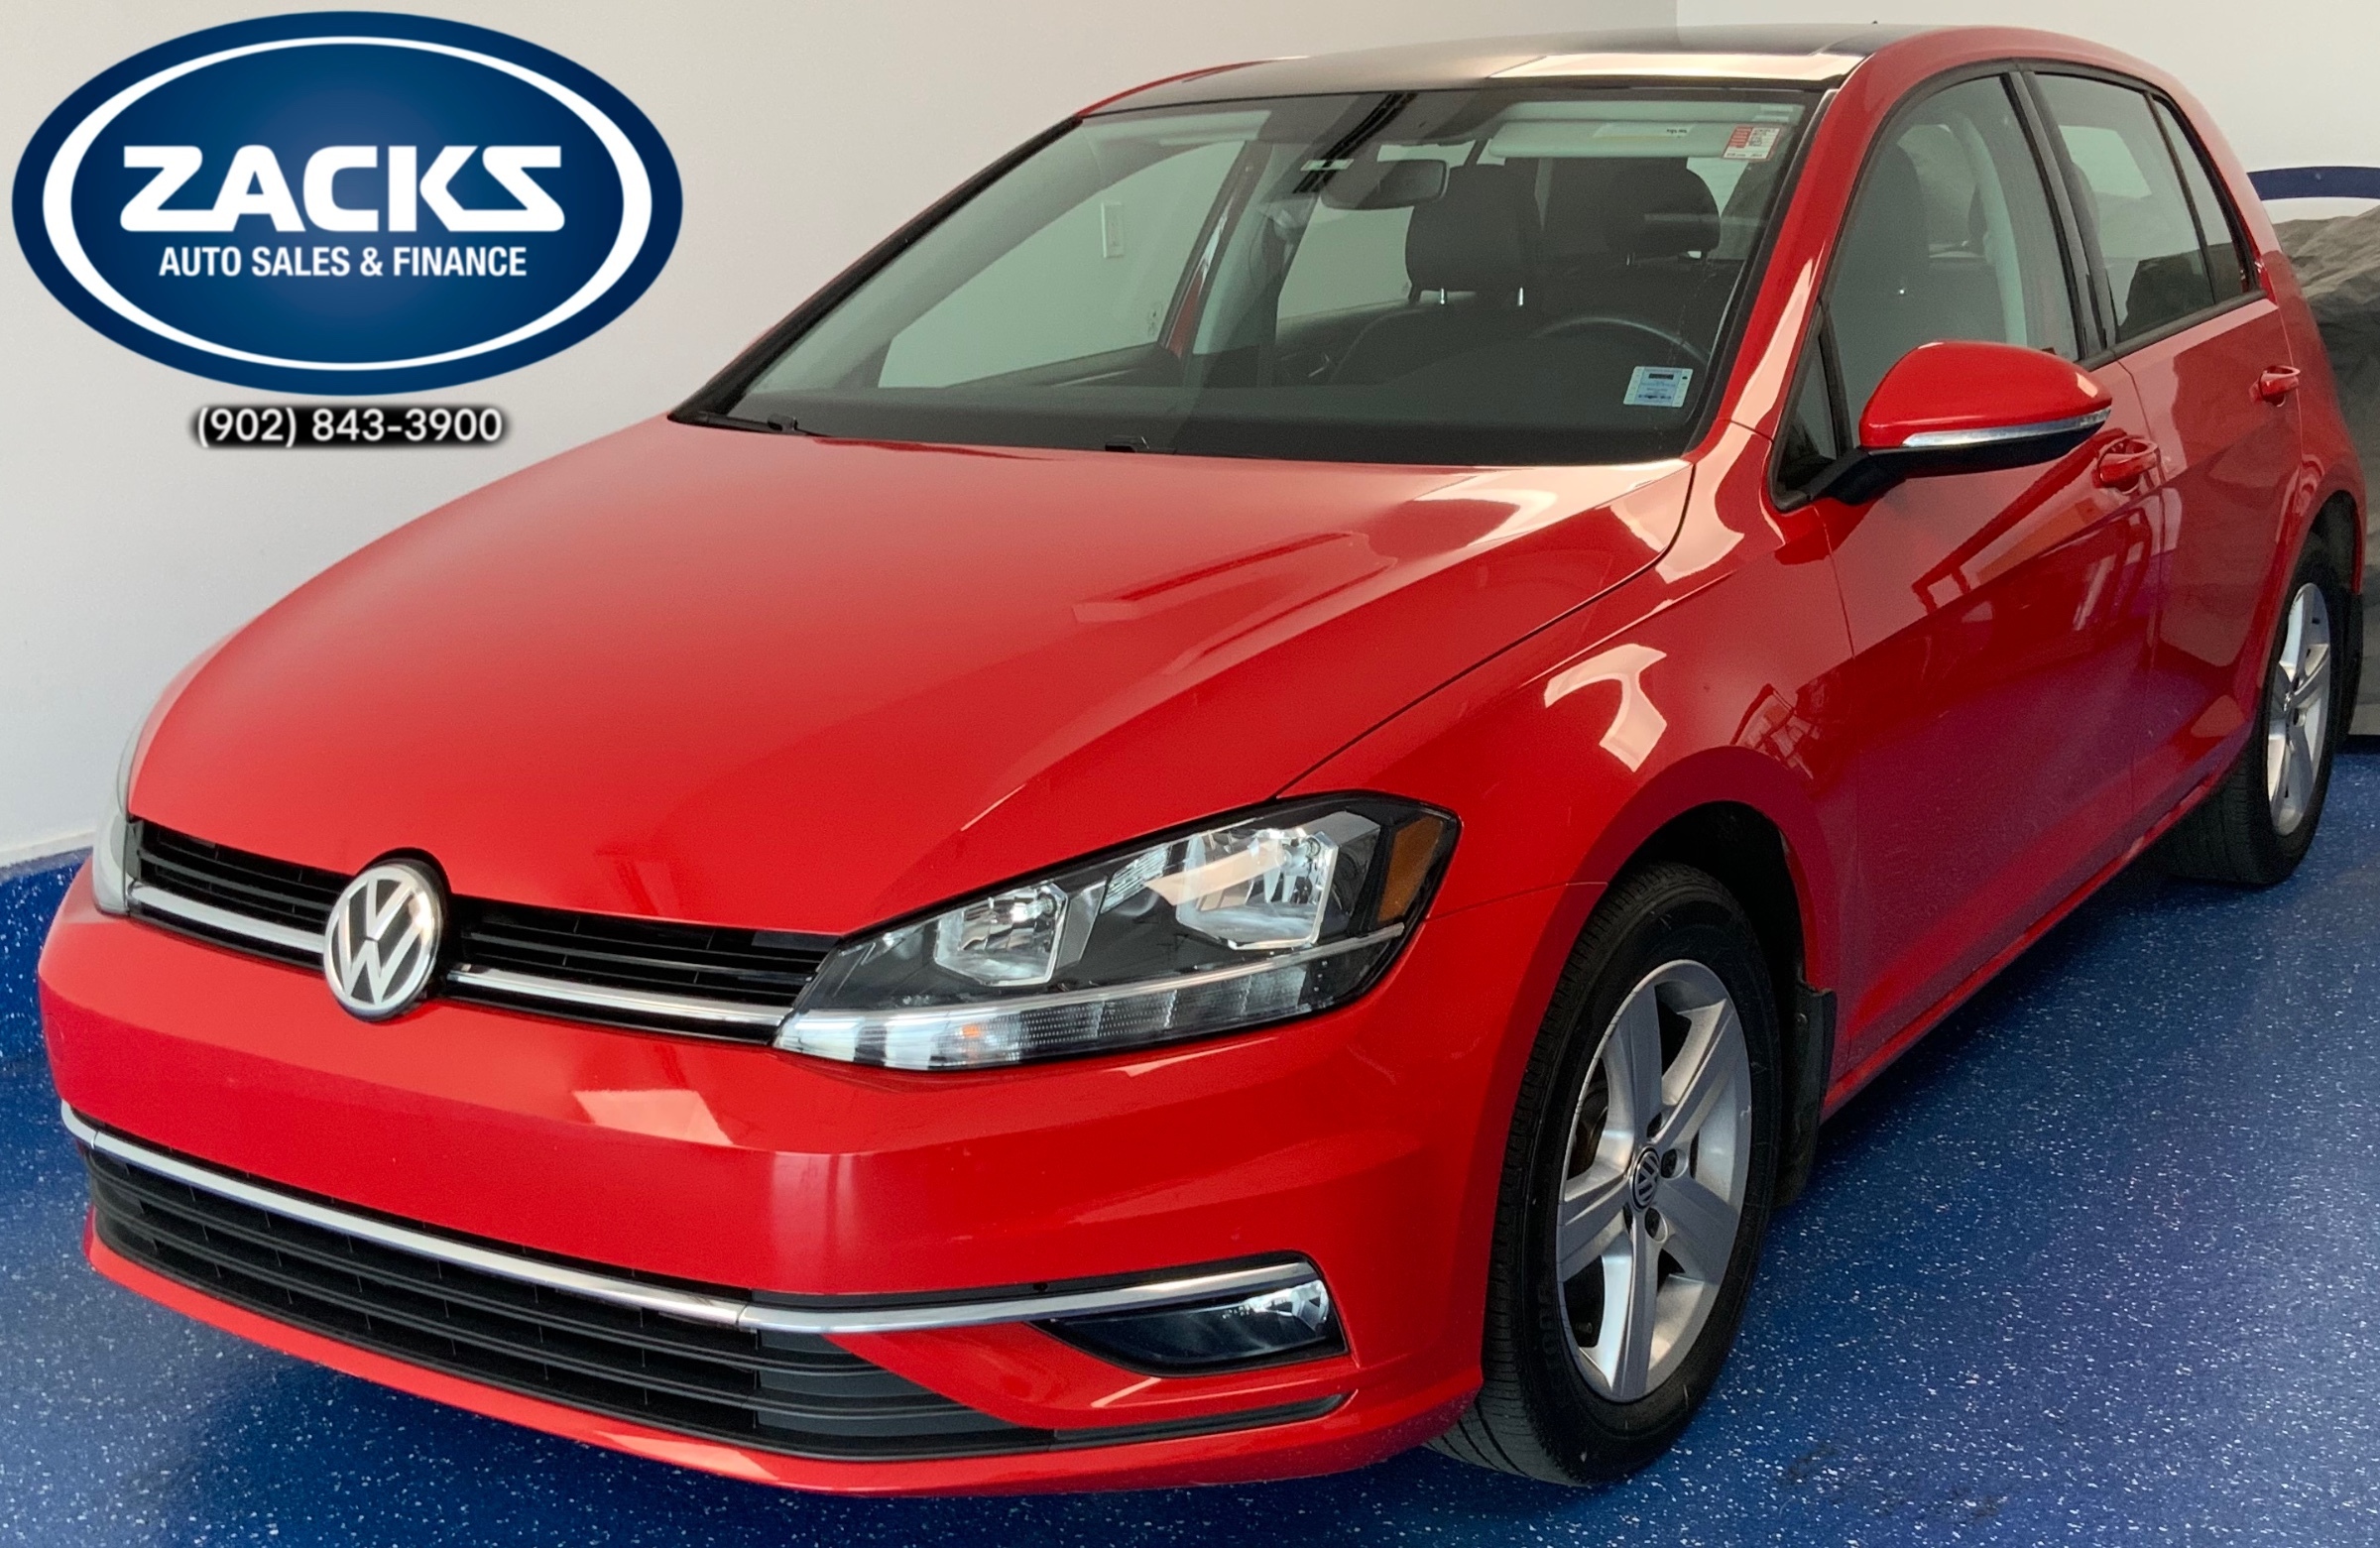 2019 Volkswagen Golf Execline | Zacks Certified | Sunroof | Low Kms | N